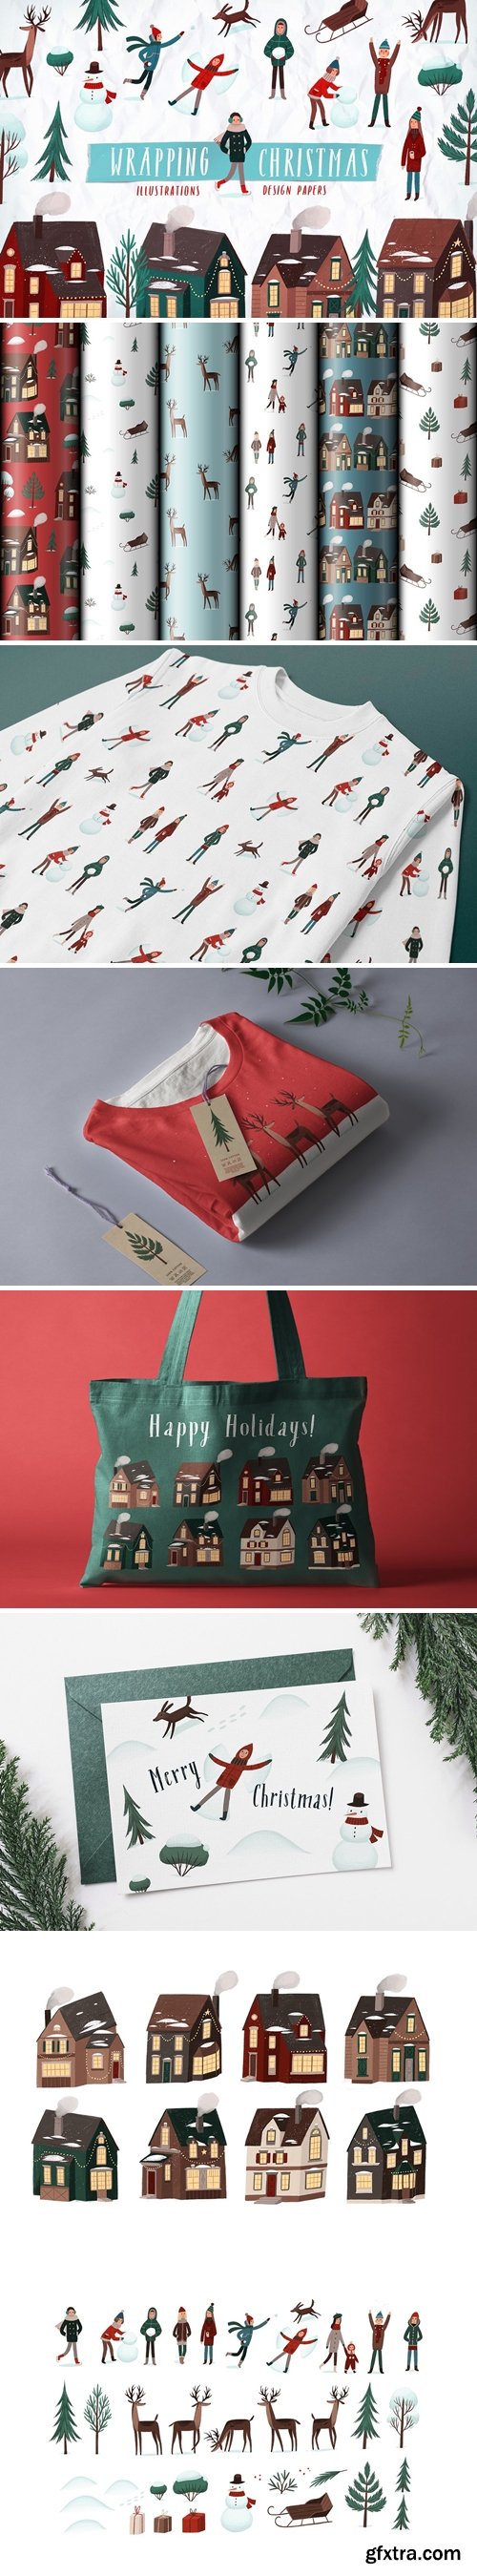 CreativeMarket - Wrapping Christmas 4249562